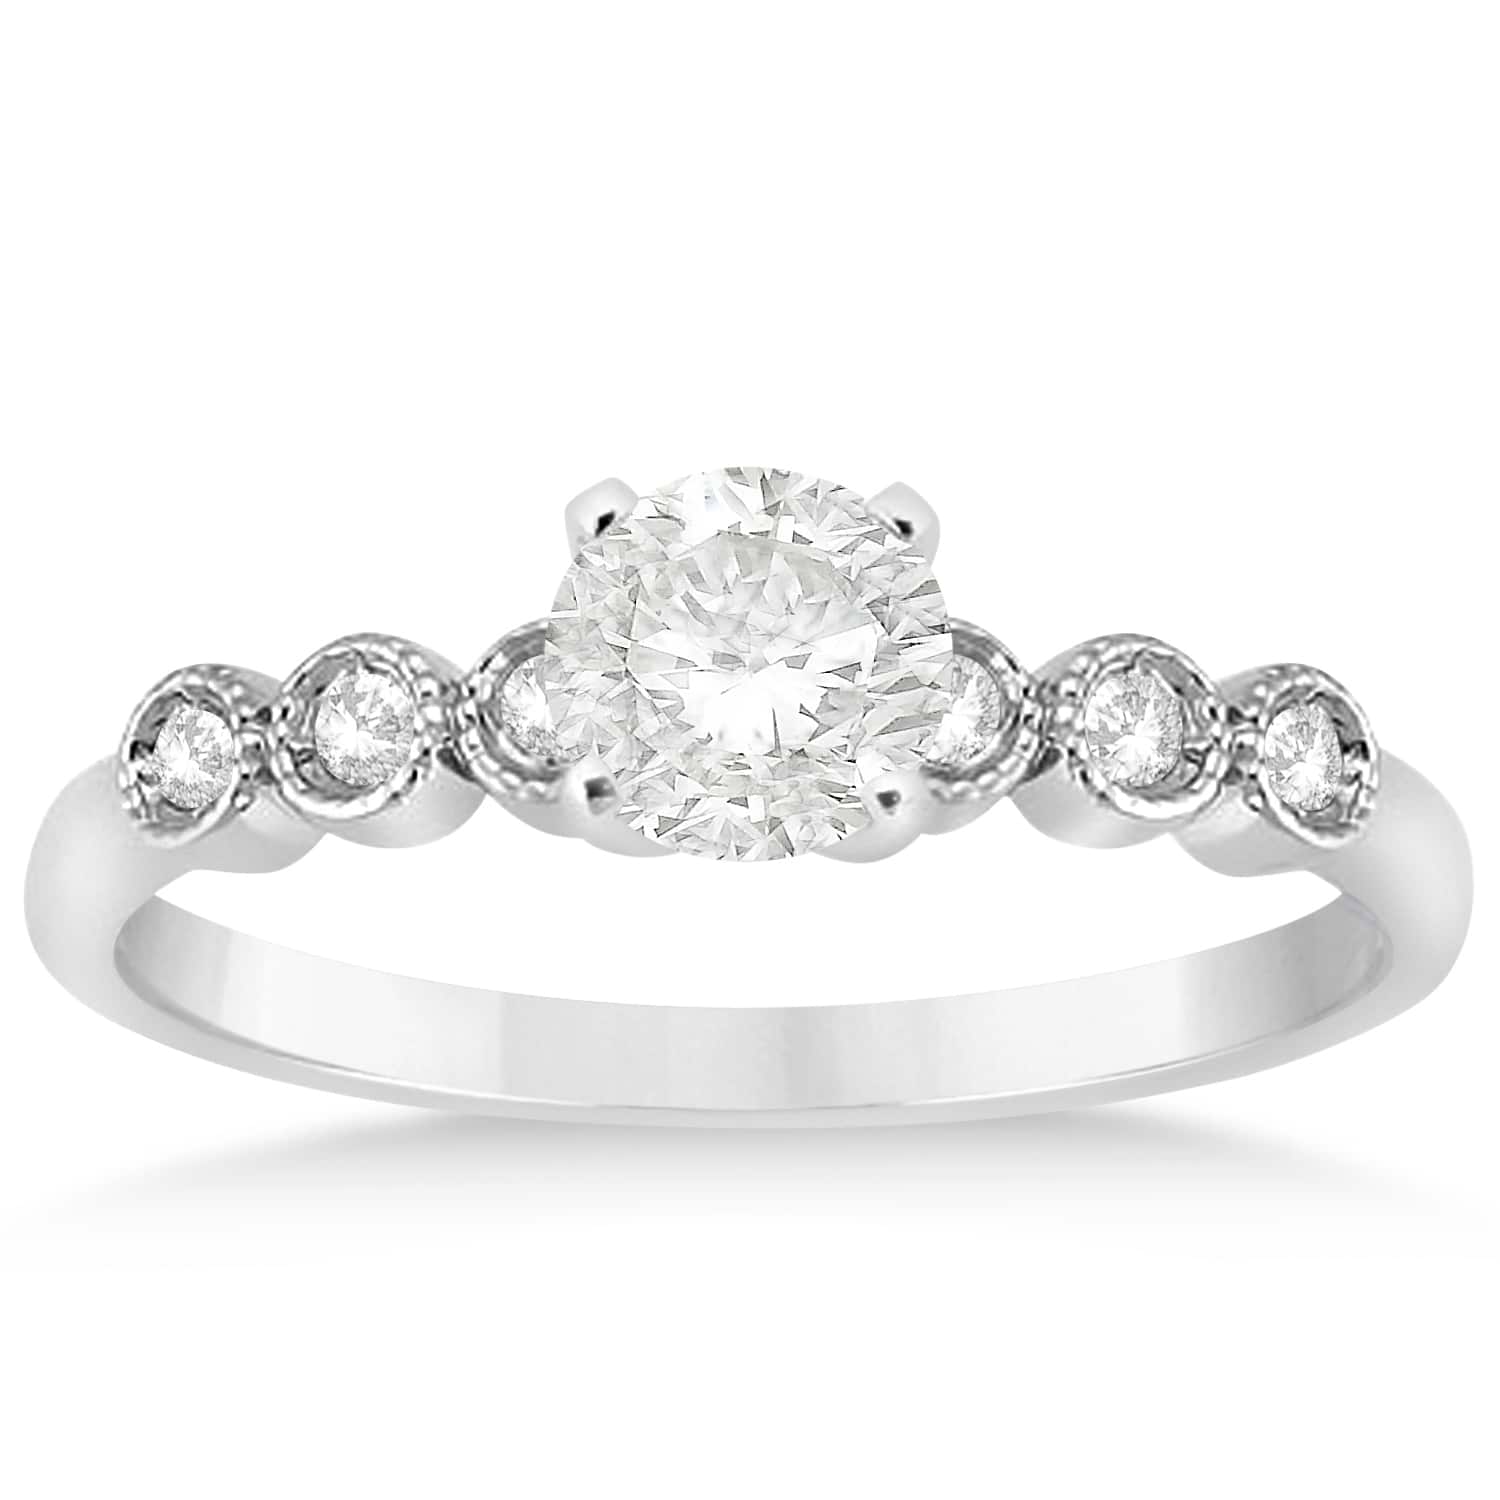 Diamond Bezel Set Engagement Ring Setting 18k White Gold 0.09ct